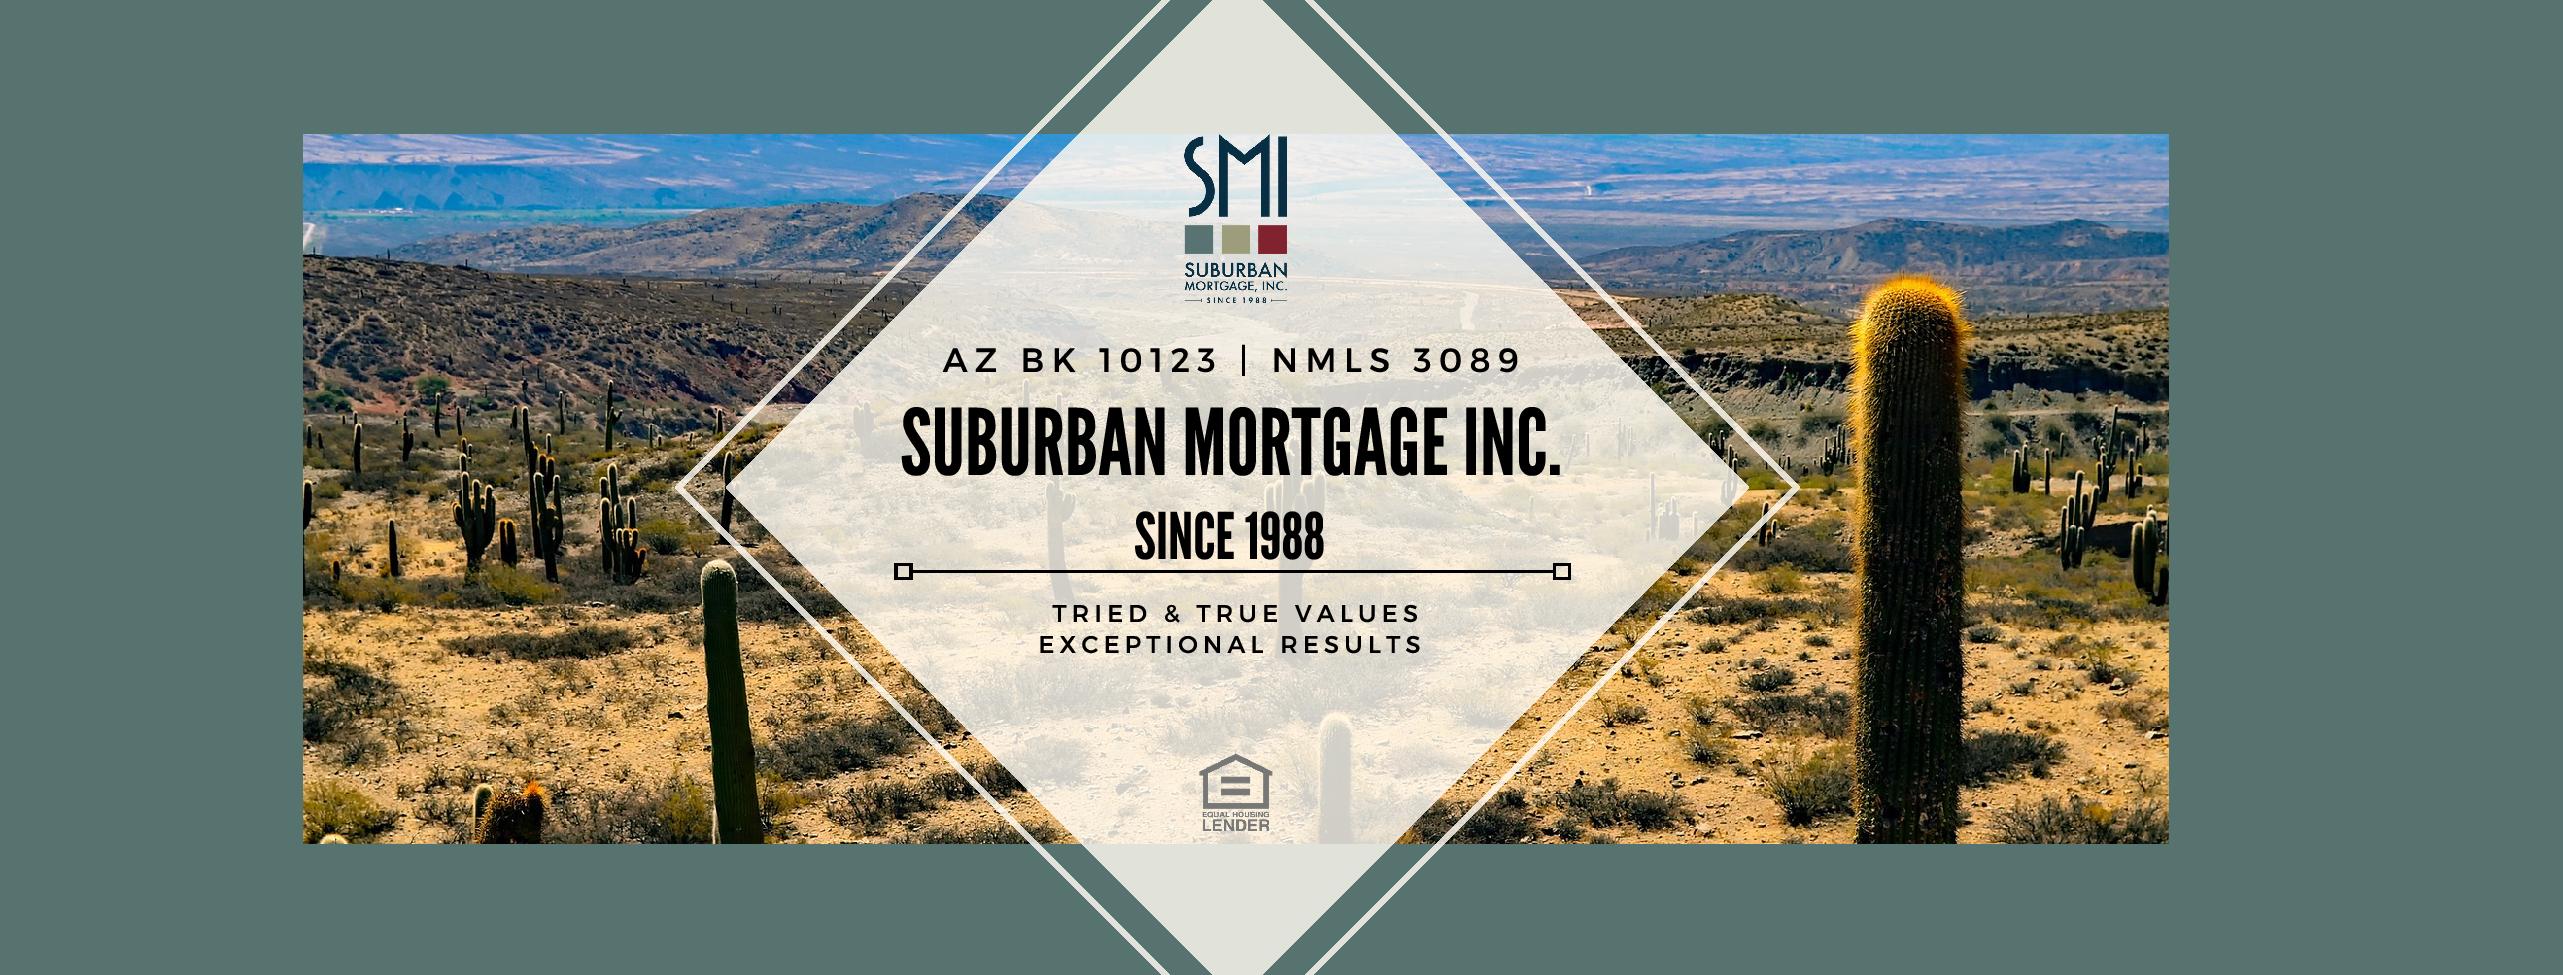 Suburban Mortgage Inc - AZ BK 10123, NMLS 3089 reviews | 7500 N Dreamy Draw Dr - Phoenix AZ